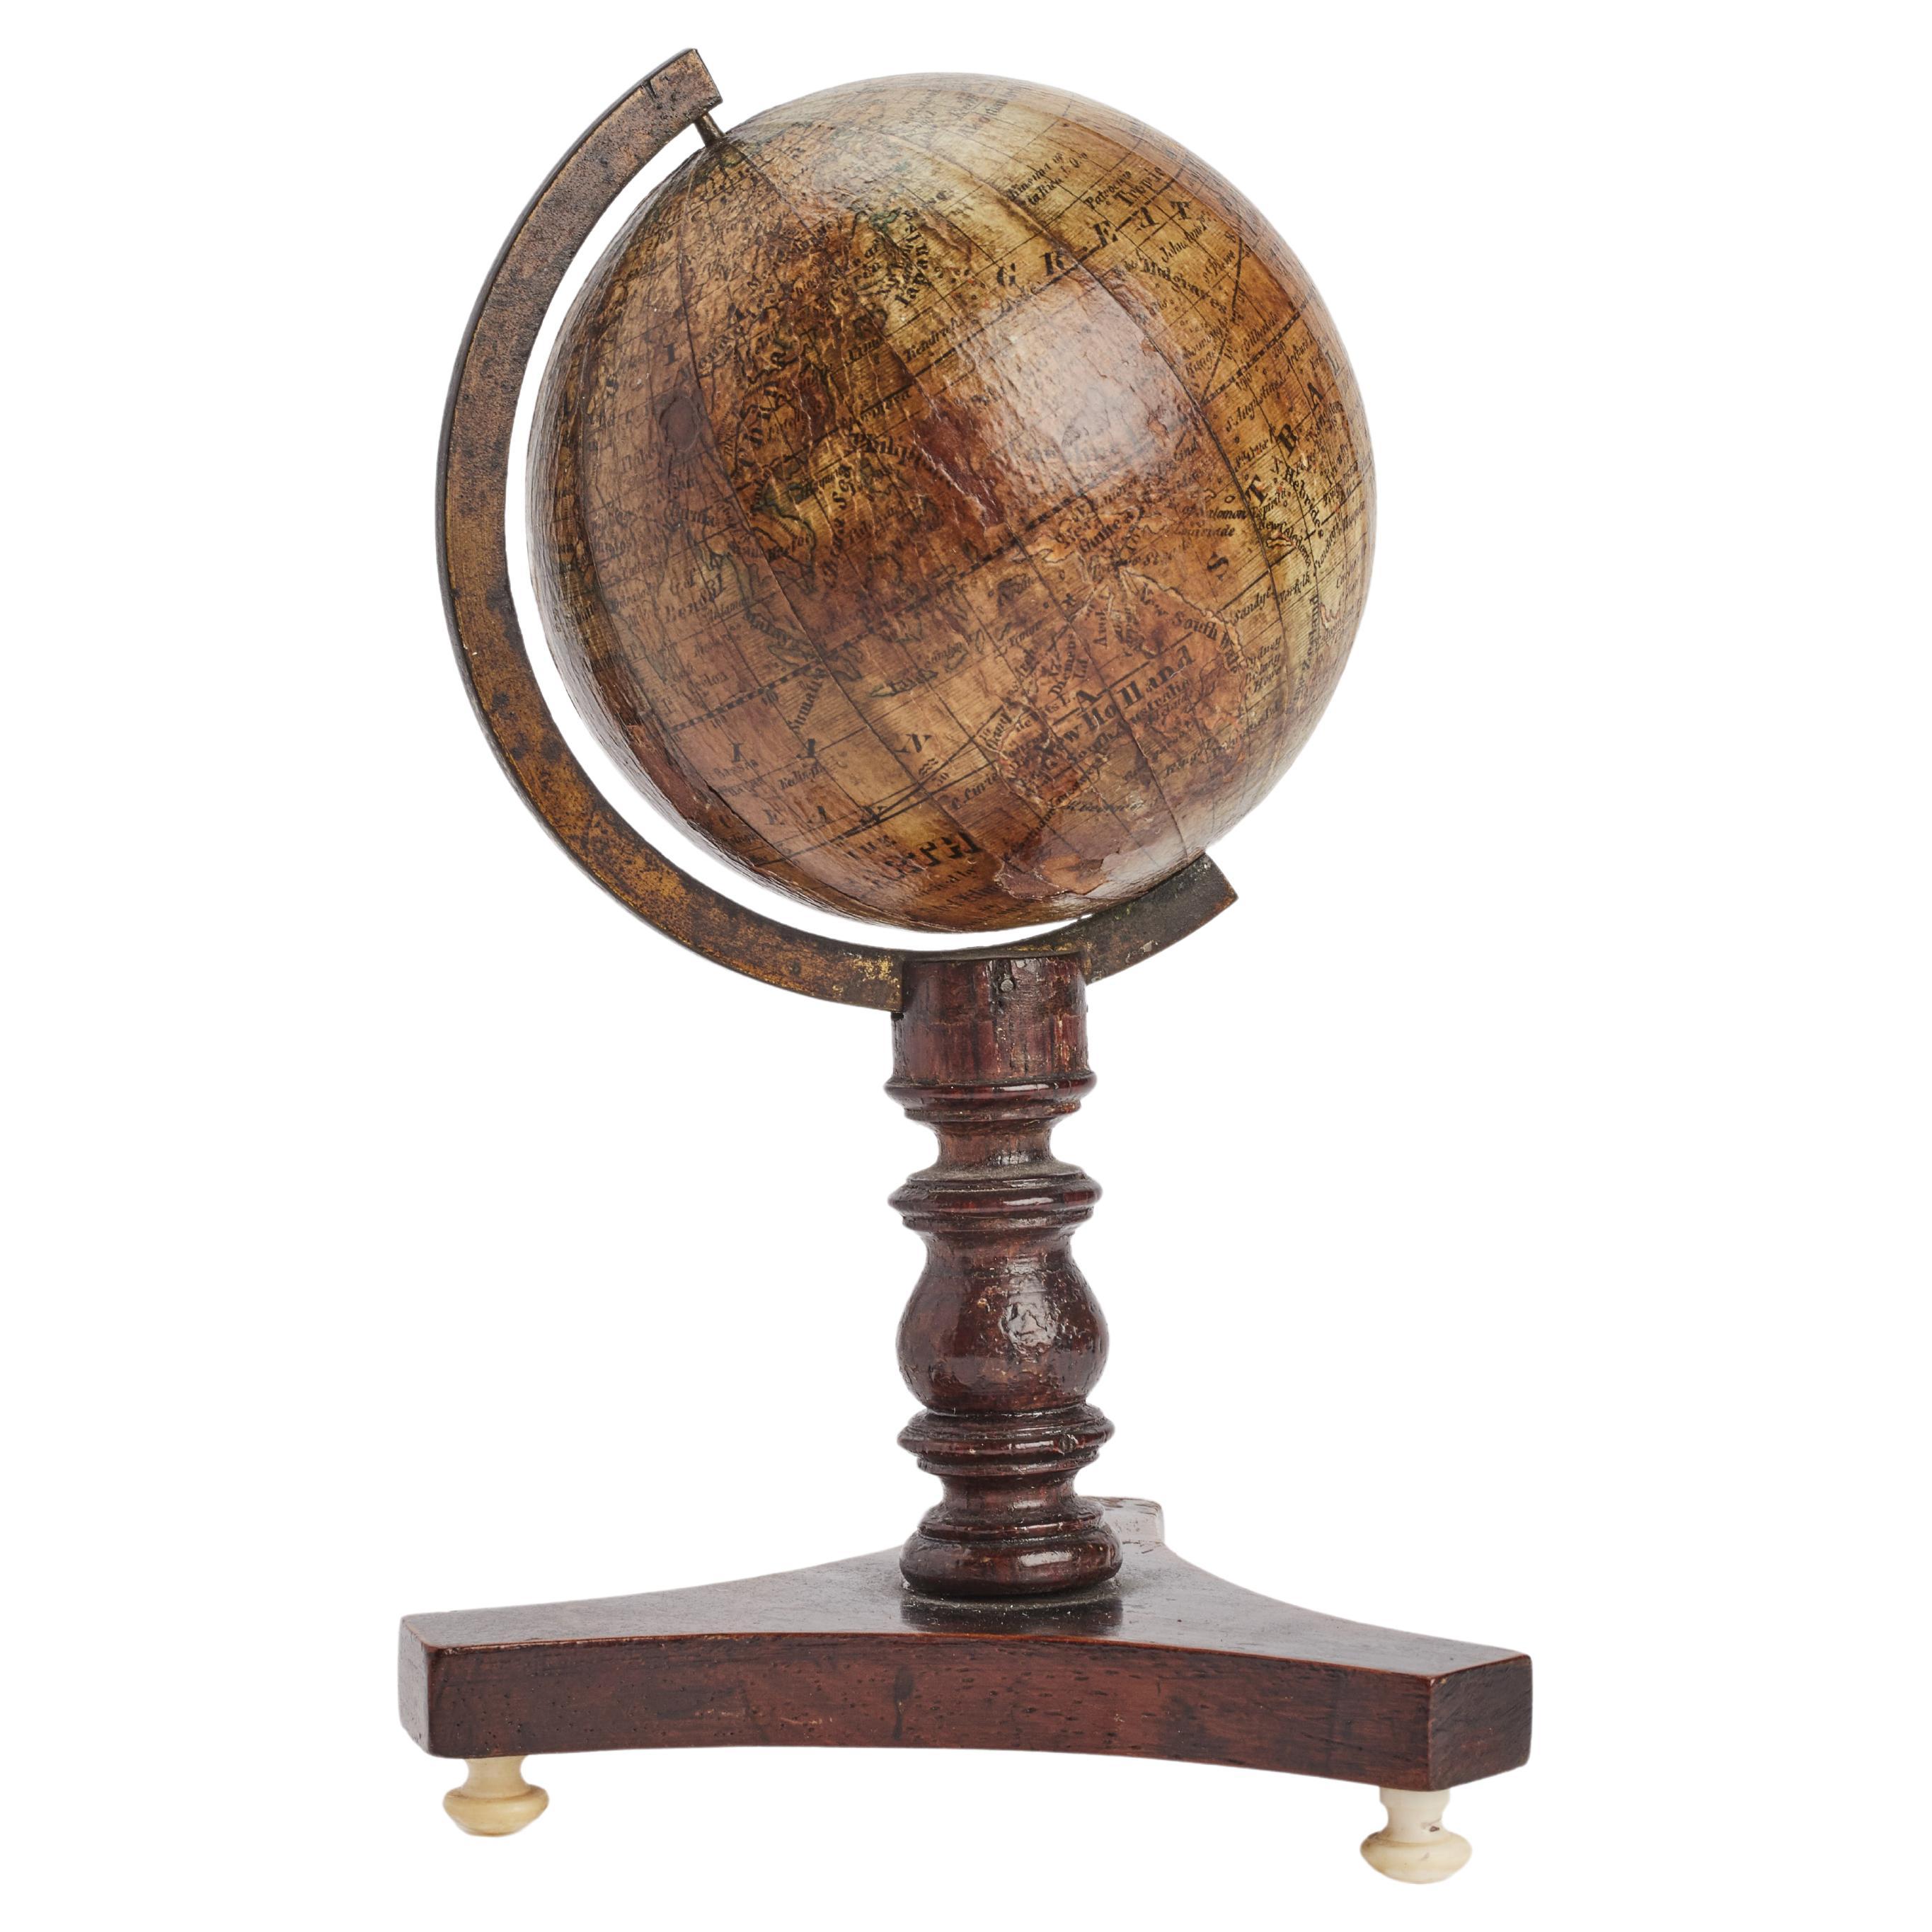 Petit globe terrestre de voyage signé Klinger, Nüremberg 1820. 